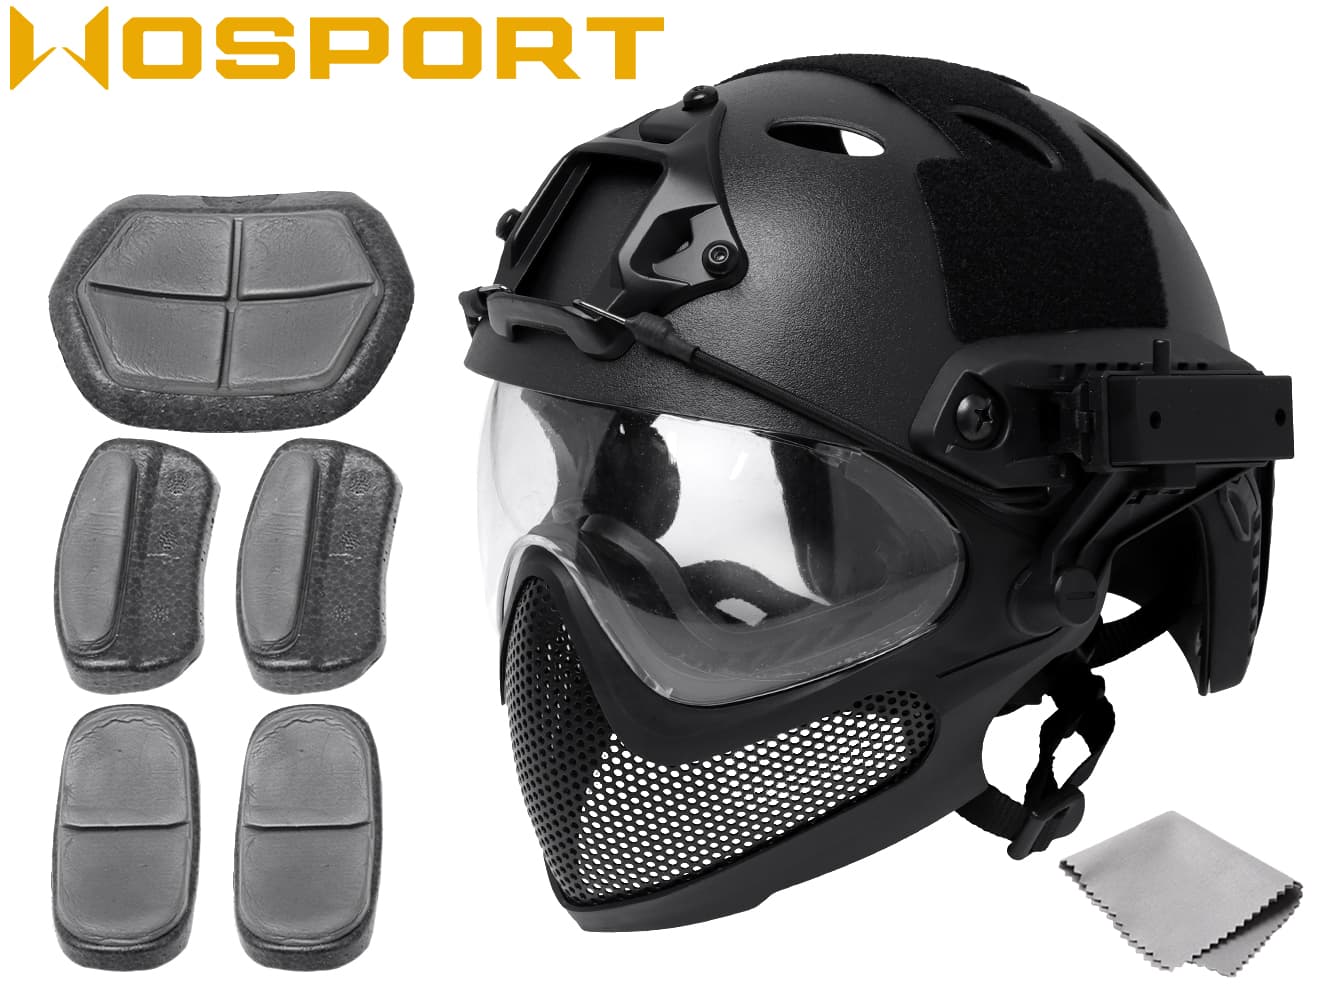 WO-HLM-001B WoSporT FAST CARBONタイプ ヘルメット&パイロットマスク